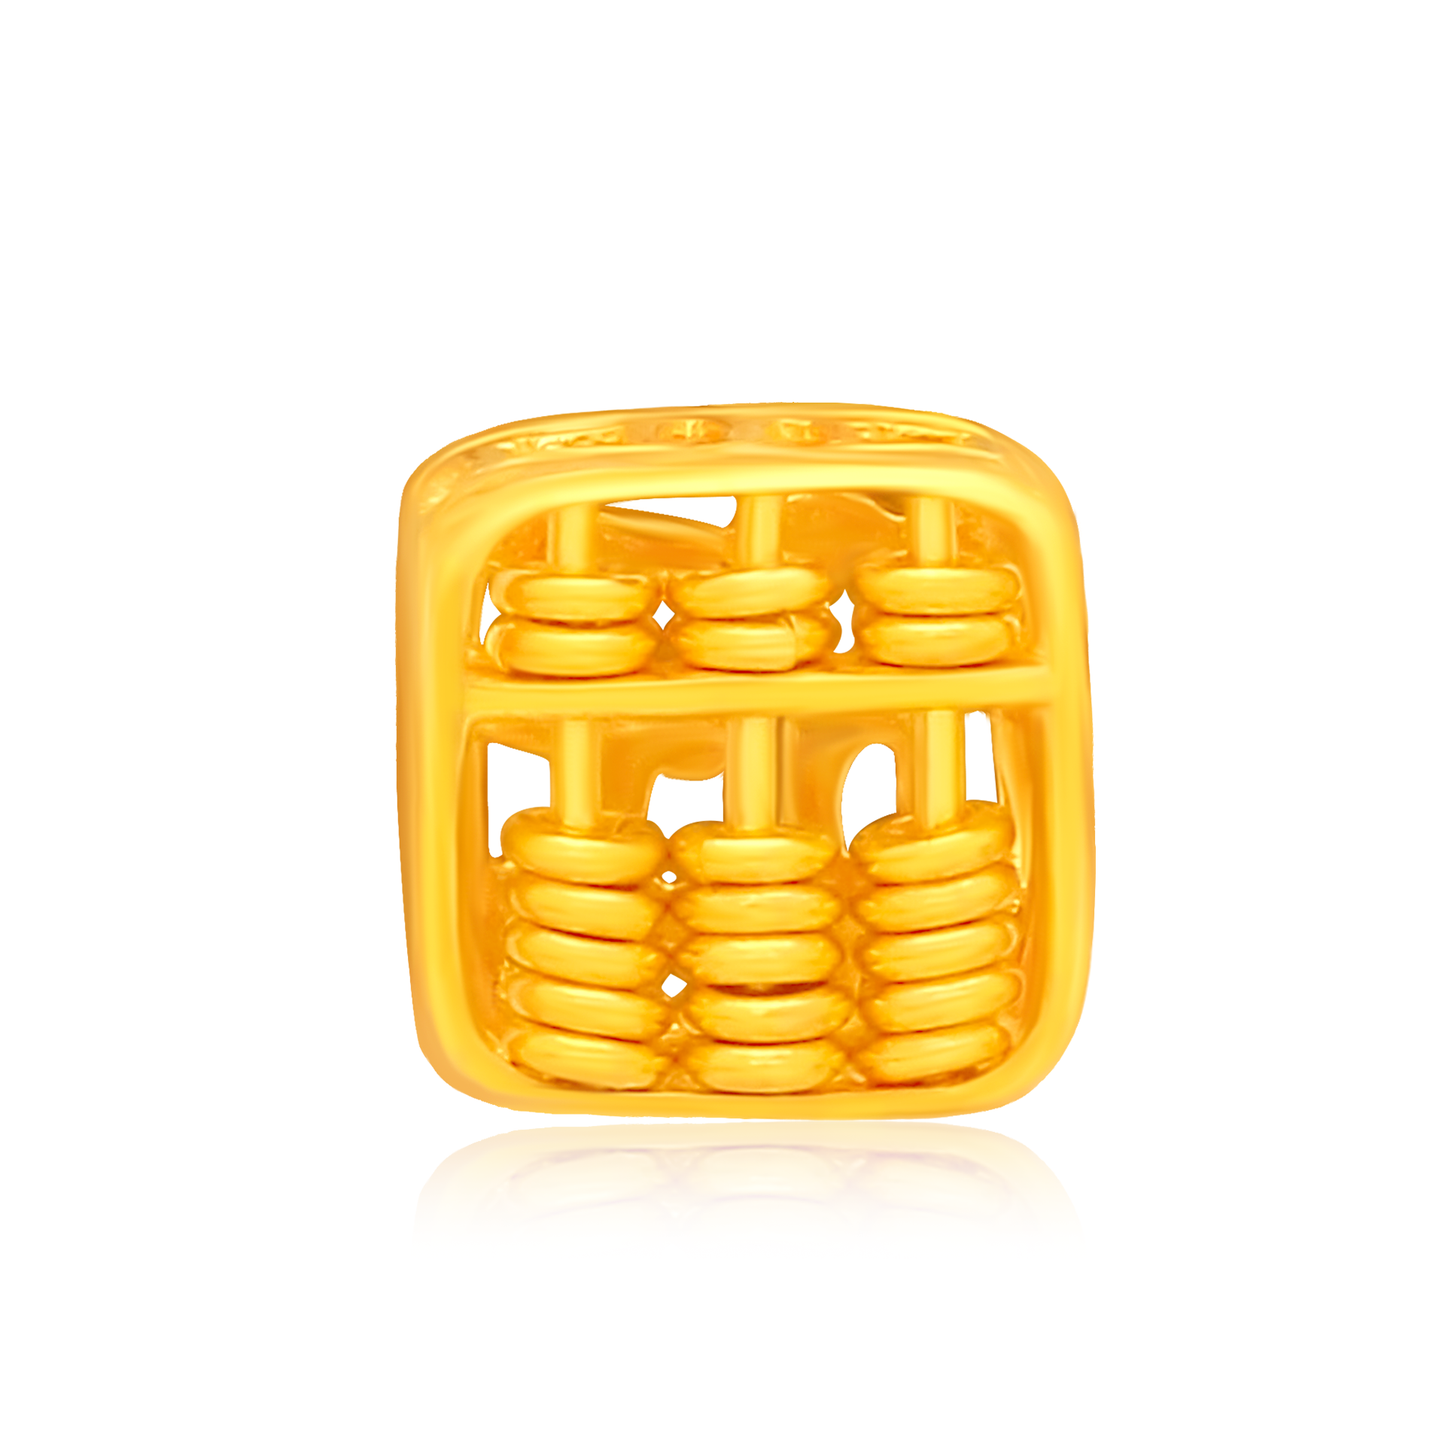 TAKA Jewellery 916 Gold Charm Abacus WANG